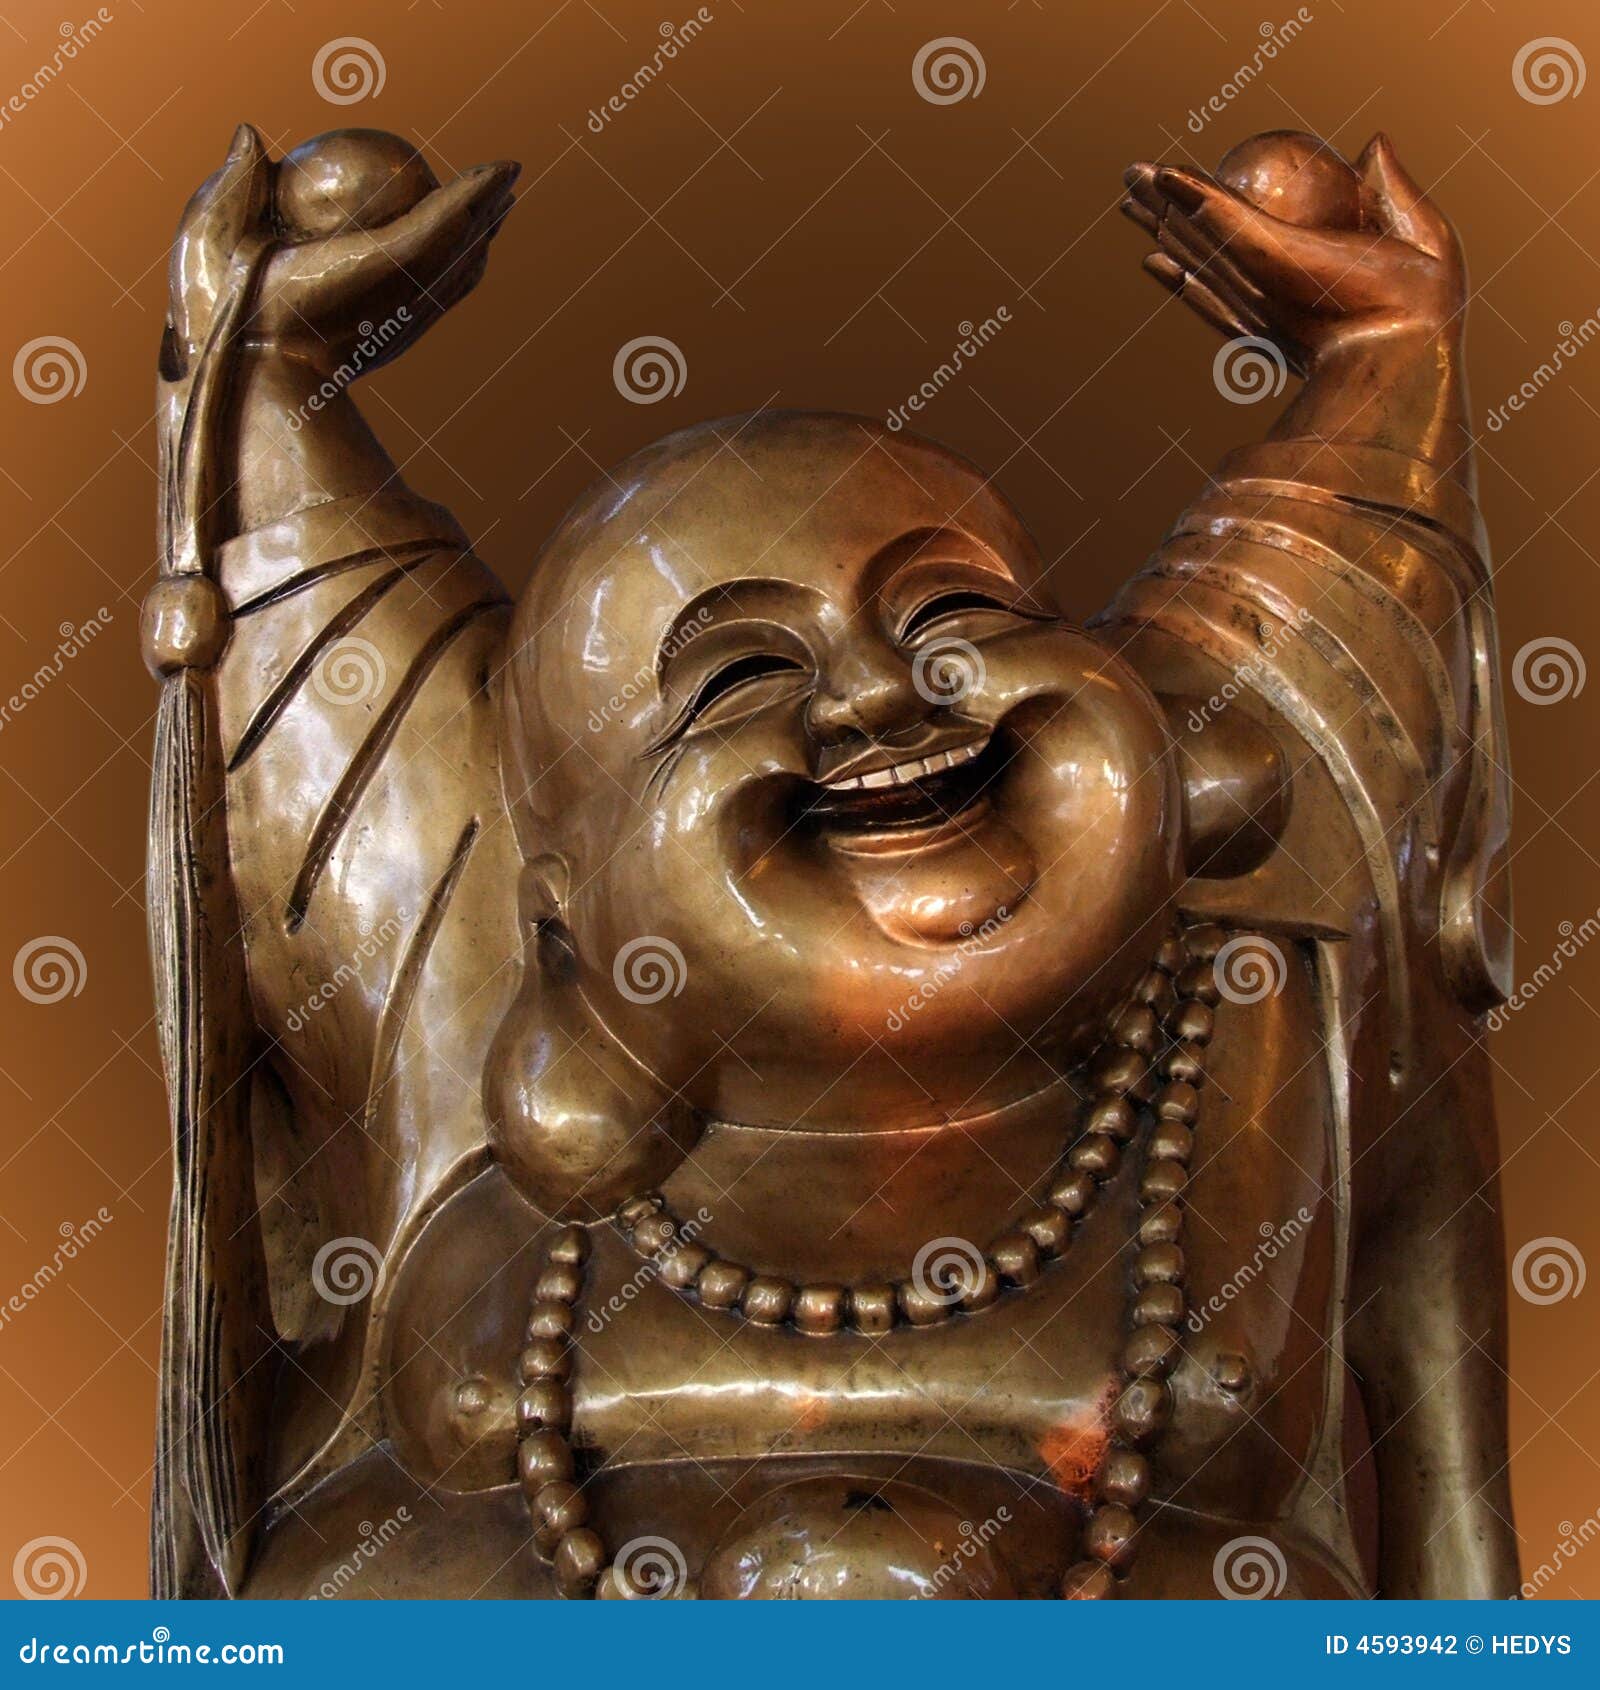 laughing buddha figurine